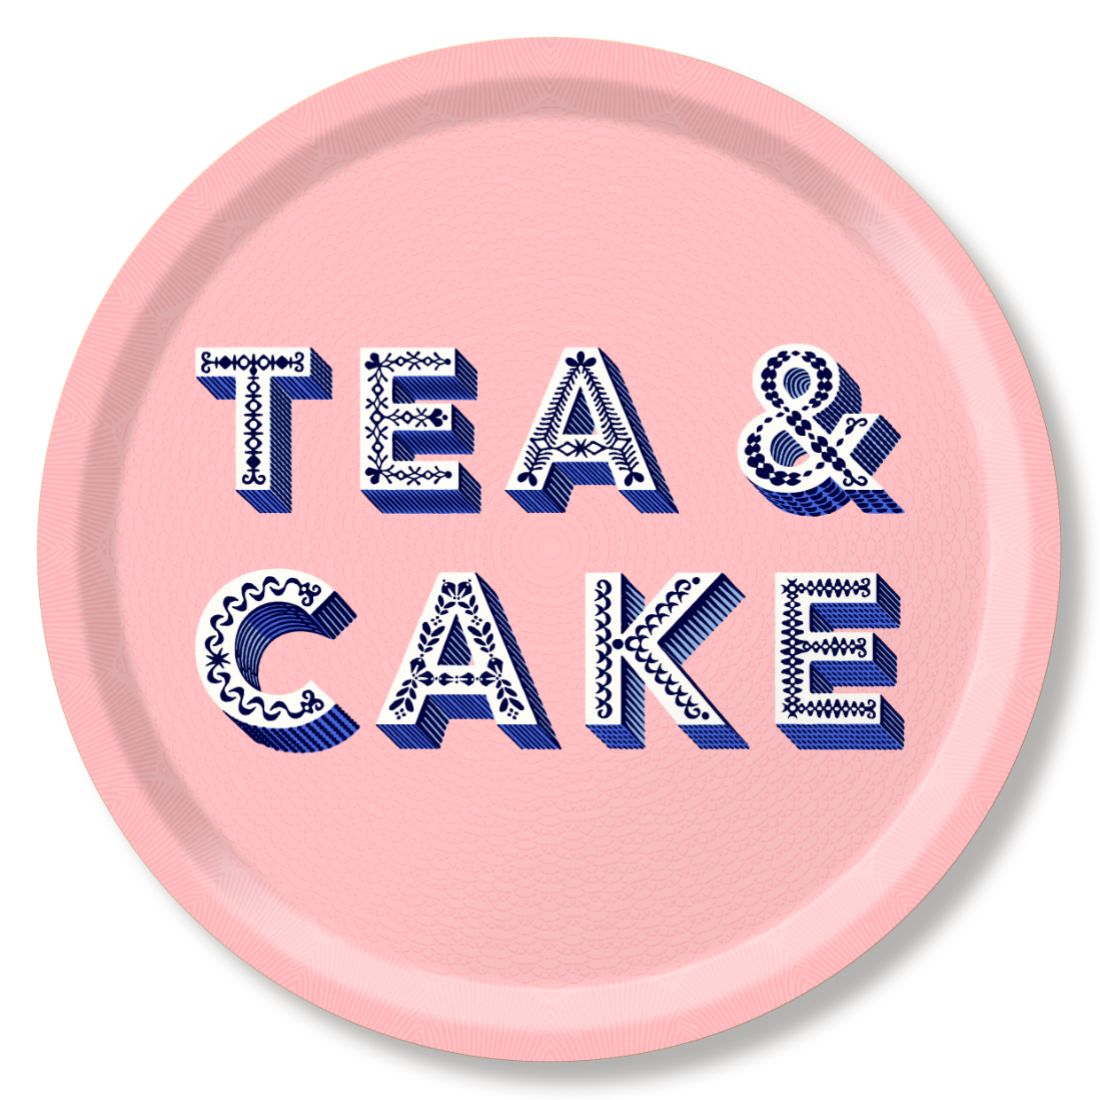 Serving Trays - Asta Barrington - Asta Barrington "Tea & Cake" Pale Pink Round Tray 39cm